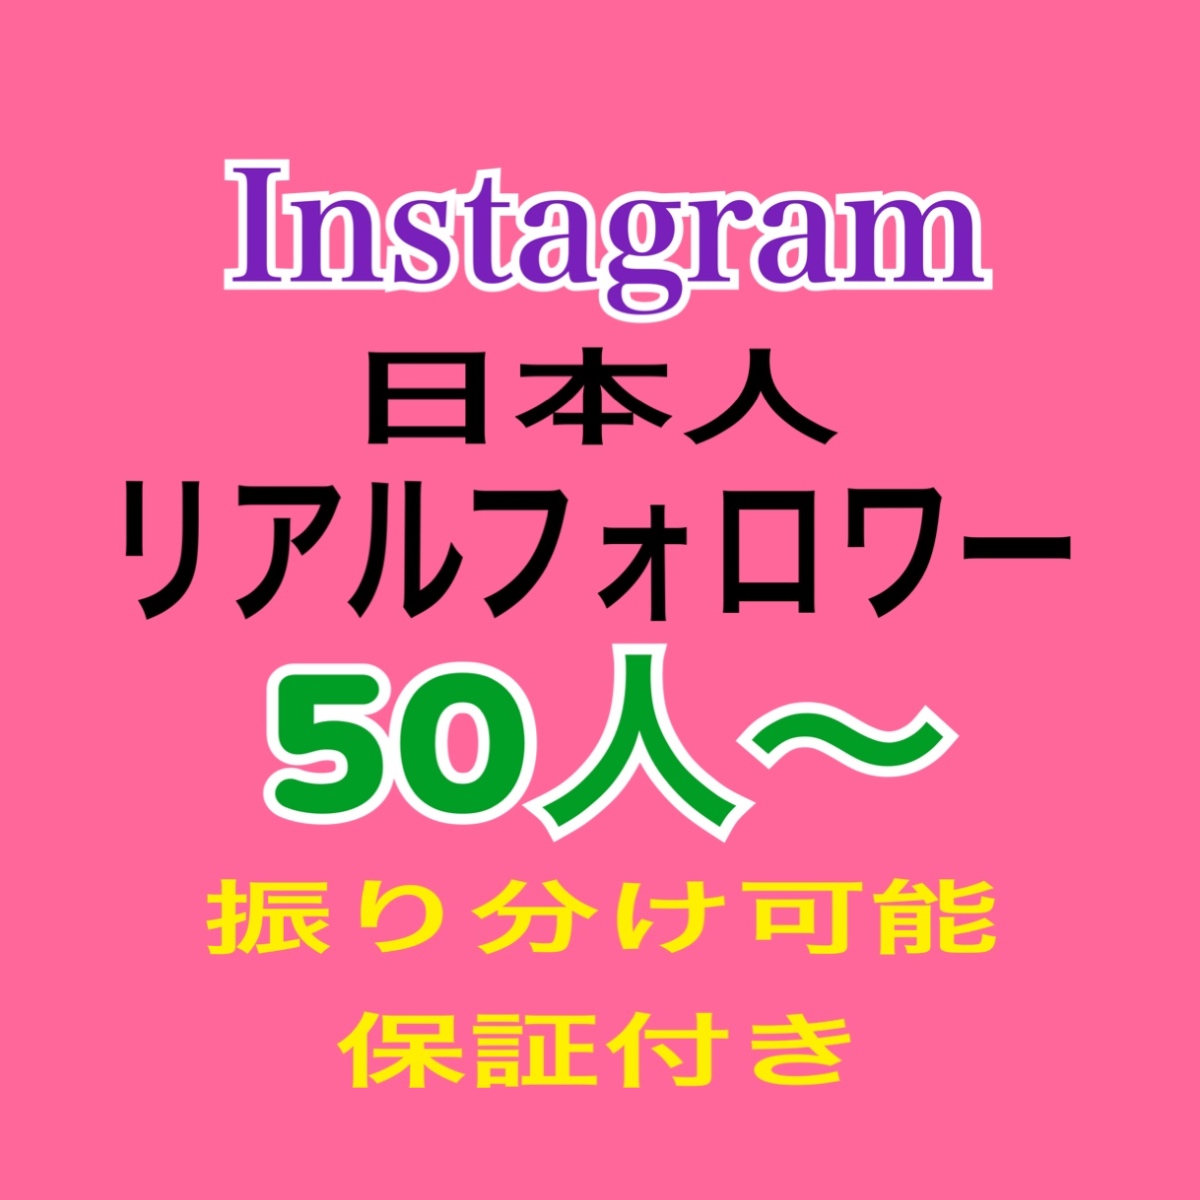 Increase 50 Japanese followers on Instagram